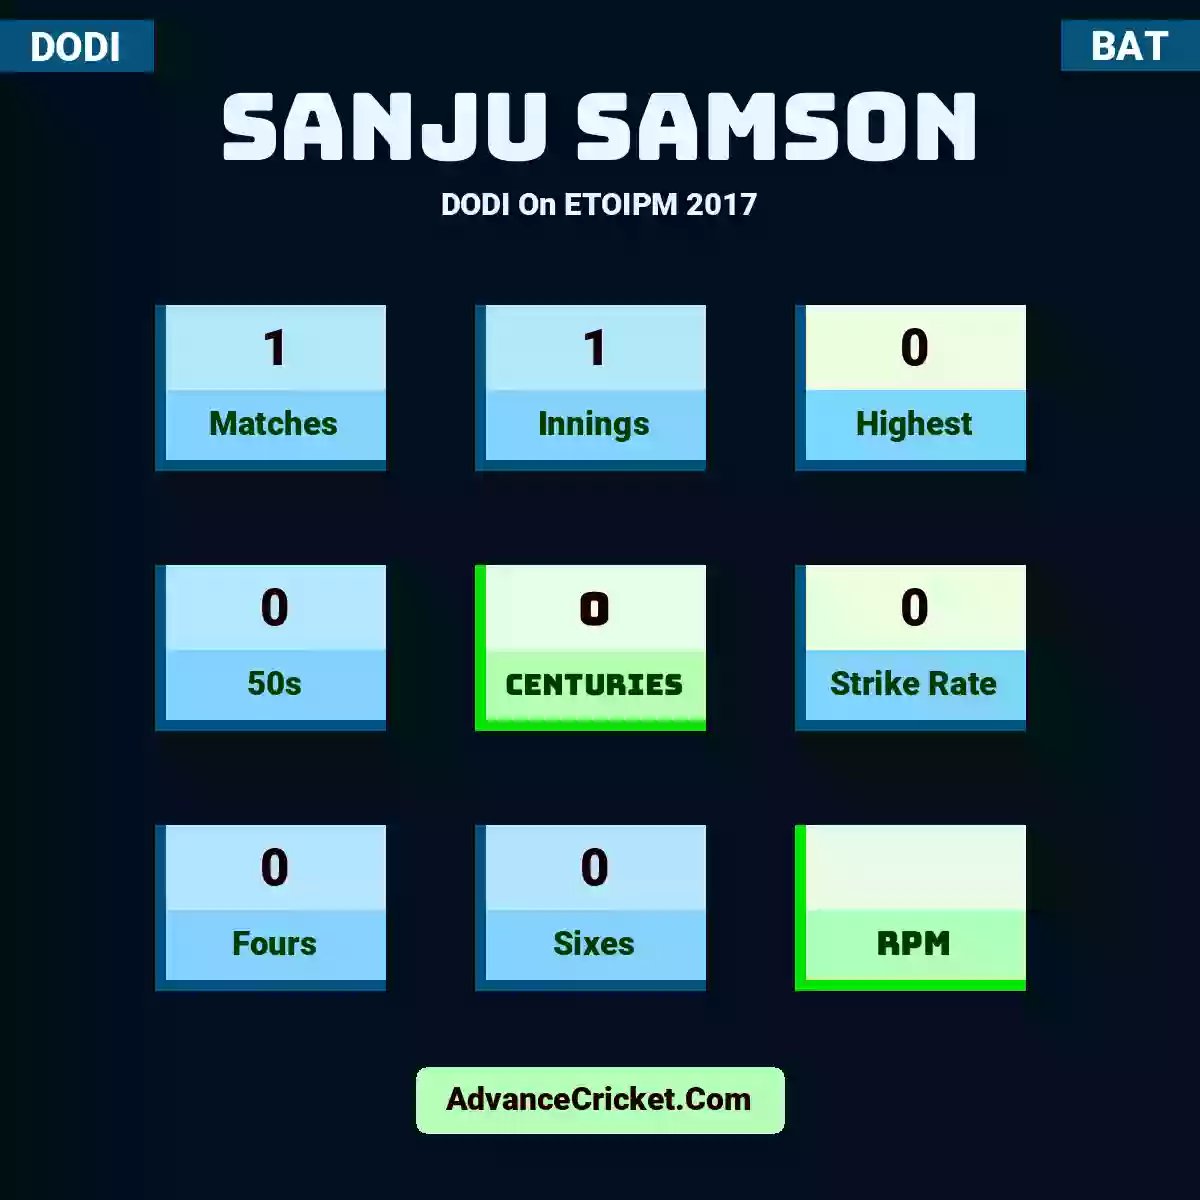 Sanju Samson DODI  On ETOIPM 2017, Sanju Samson played 1 matches, scored 0 runs as highest, 0 half-centuries, and 0 centuries, with a strike rate of 0. S.Samson hit 0 fours and 0 sixes.